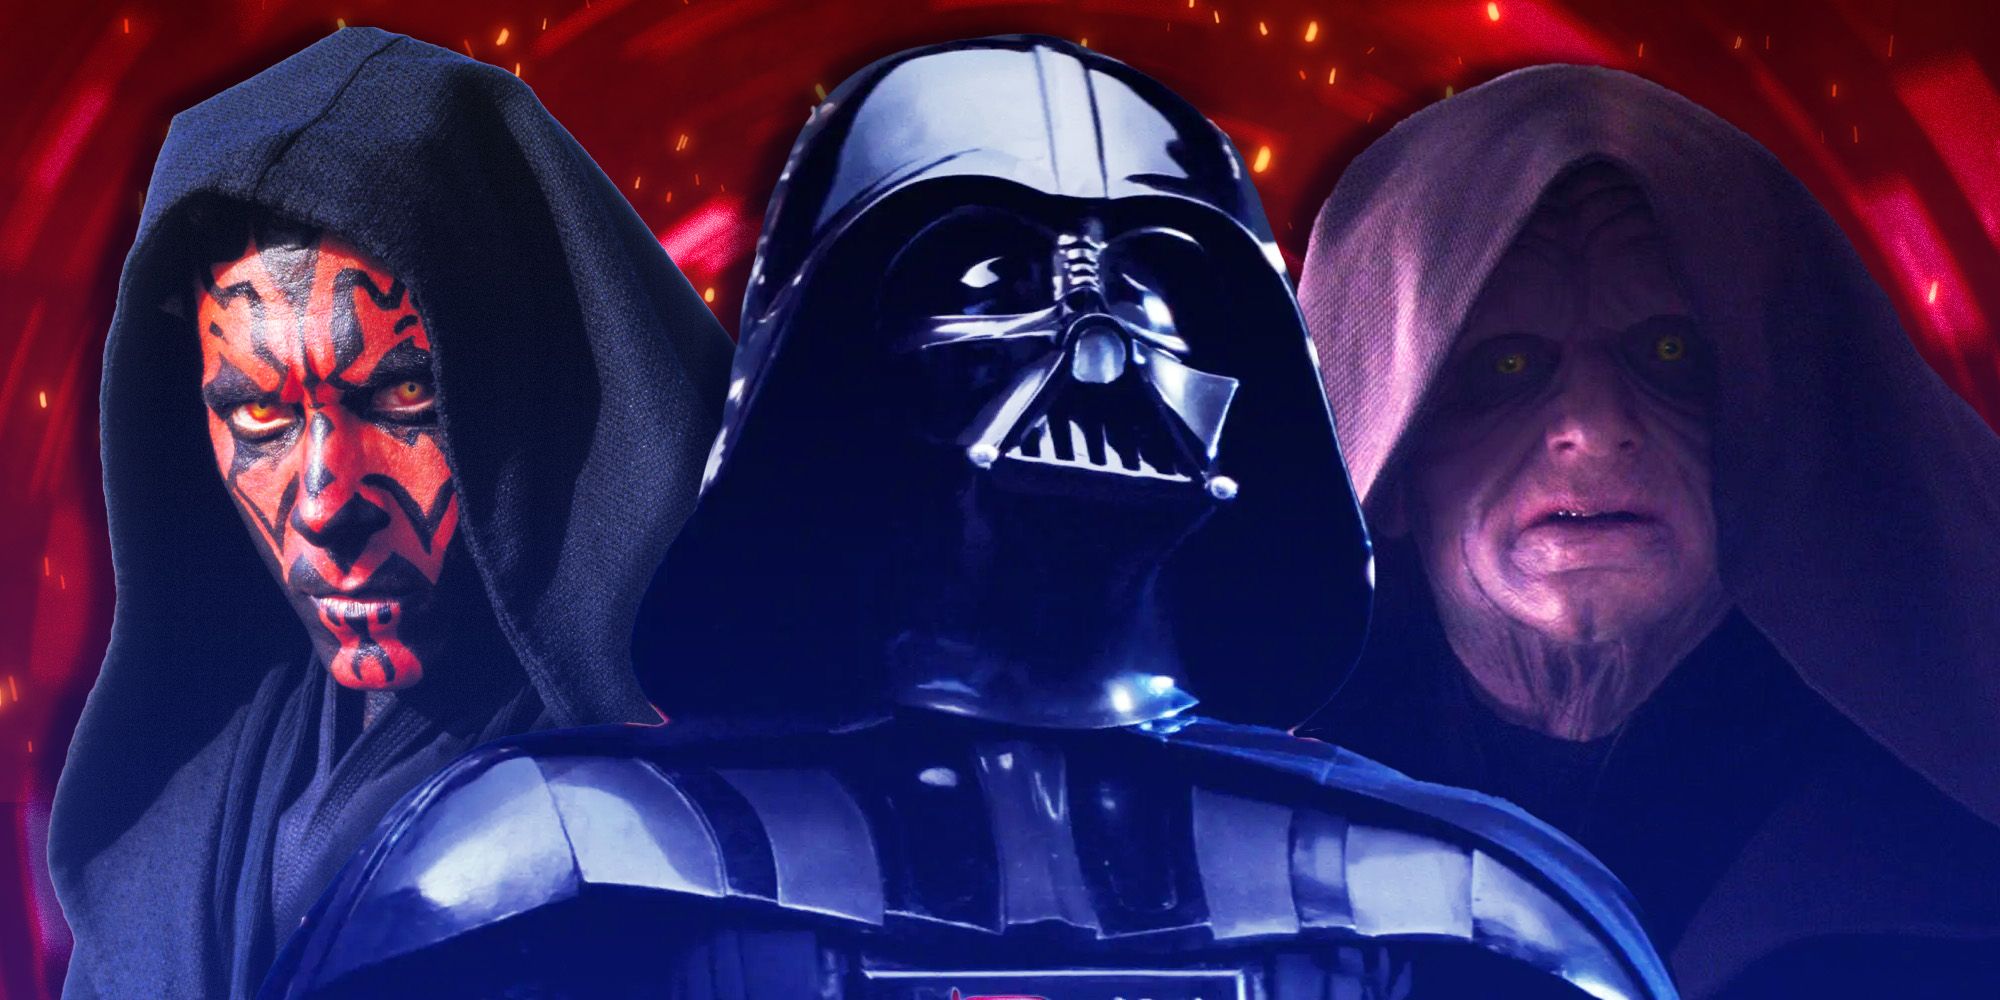 Darth Vader, Darth Maul, and Palpatine